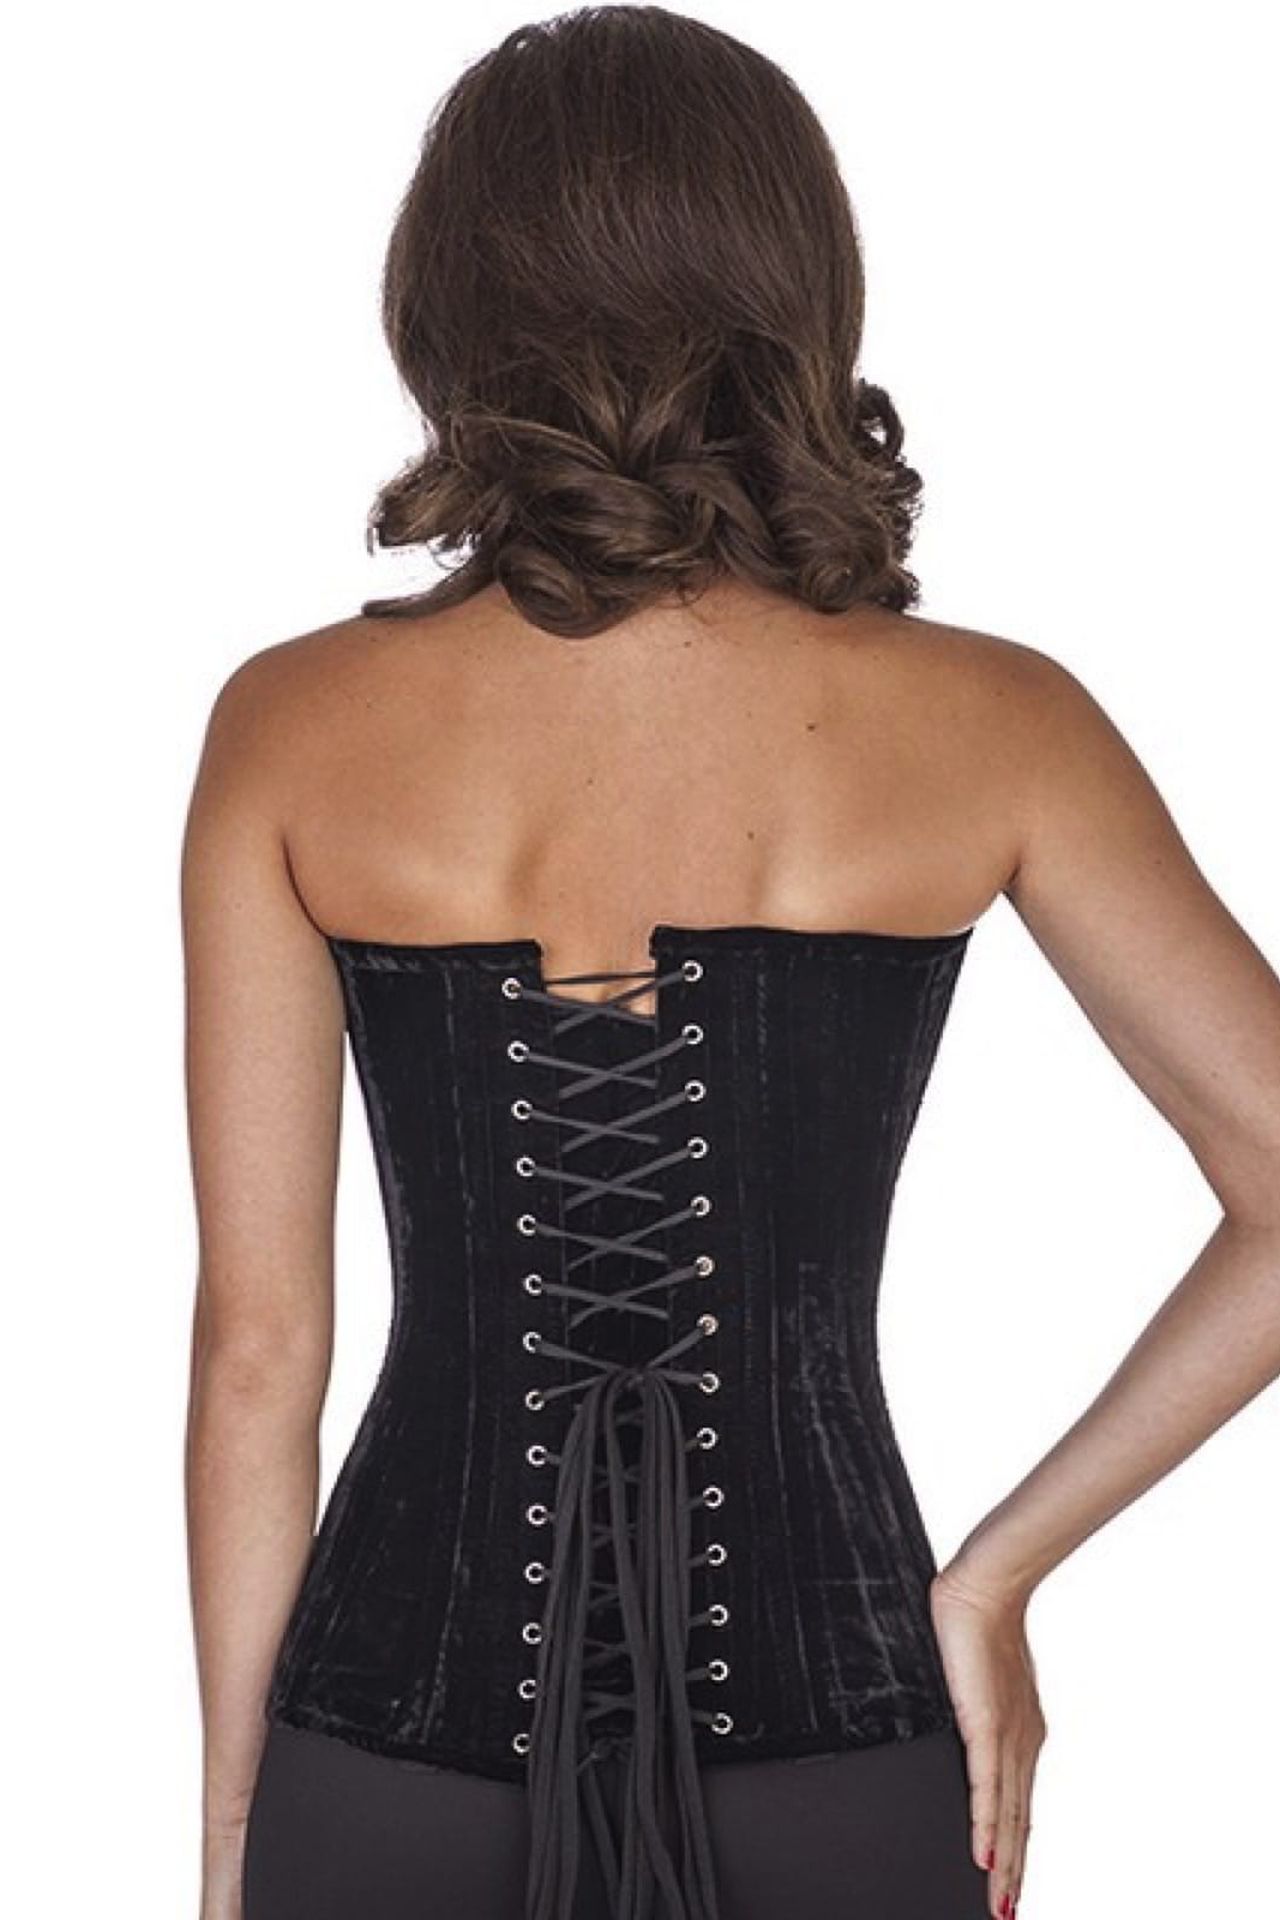 Fluweel corset zwart volborst plunge diep decolleté Korset vl60